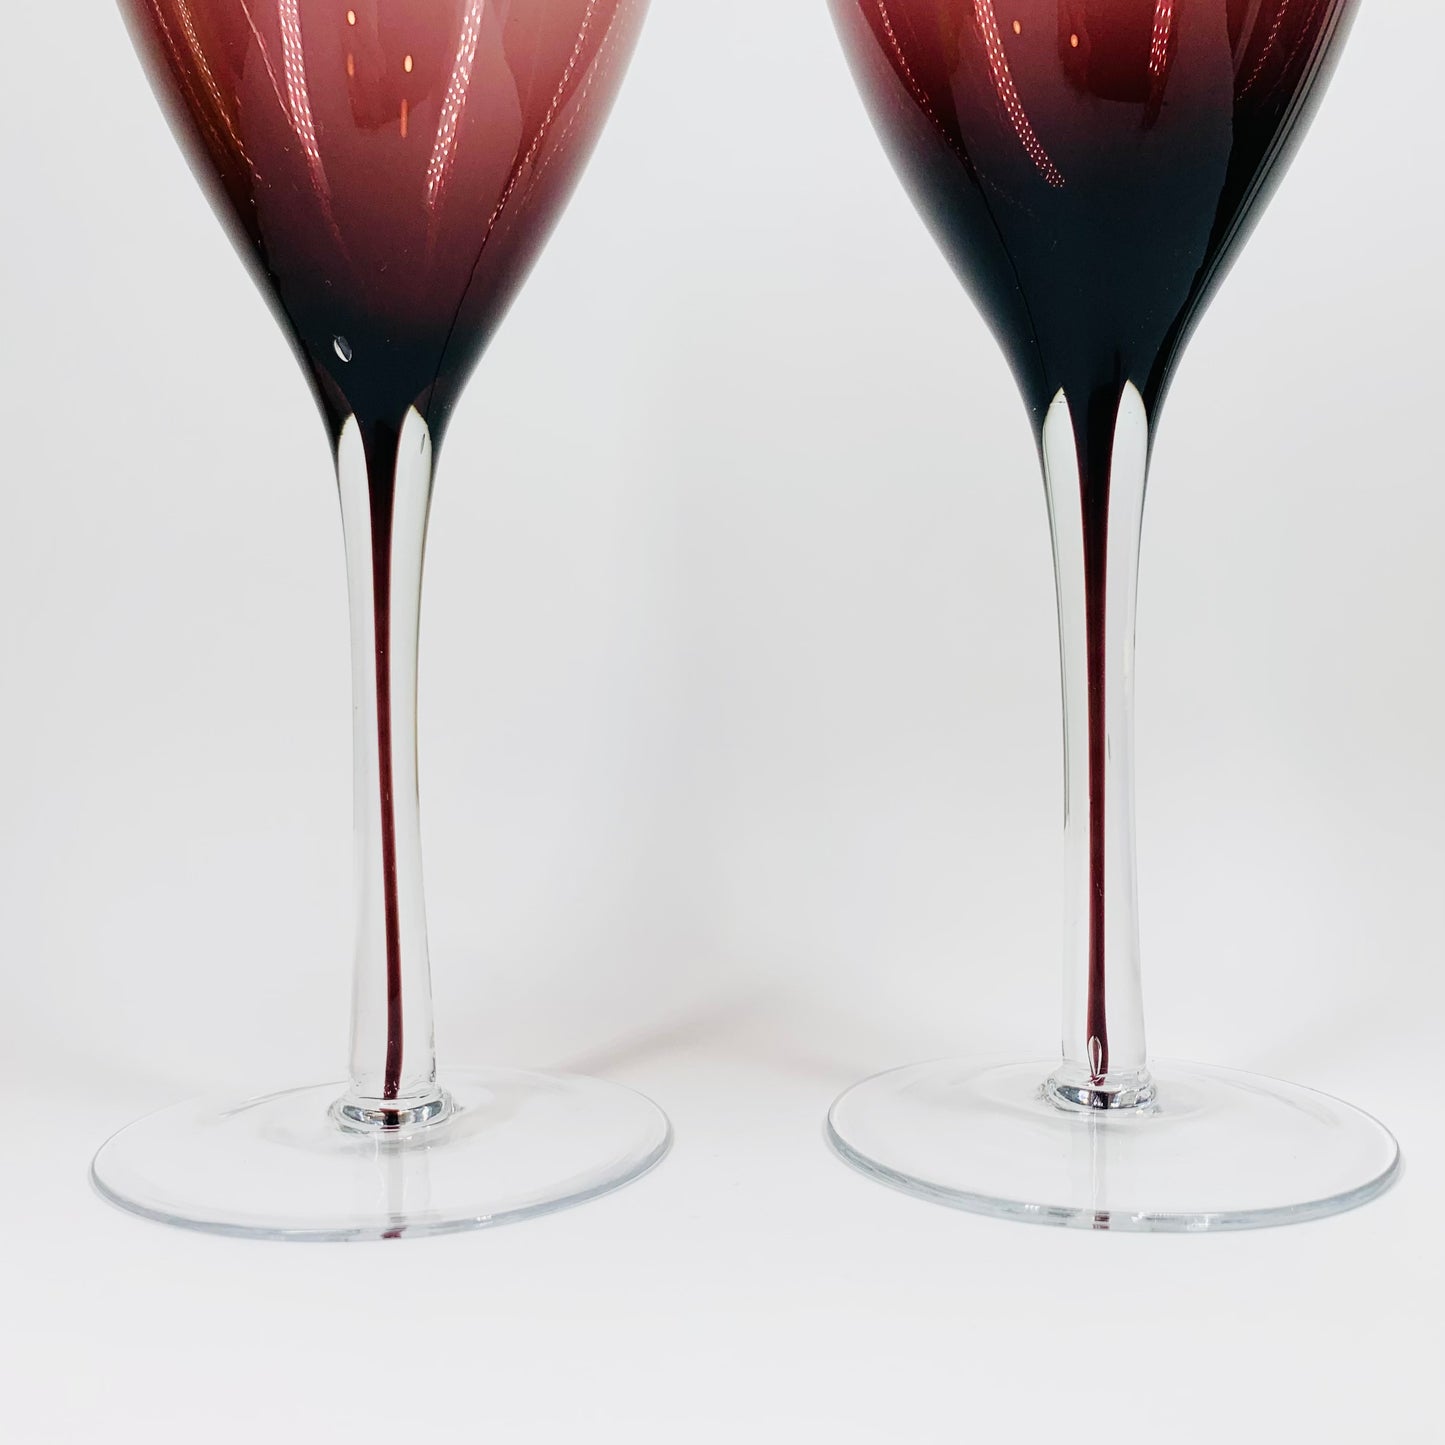 Vintage Kosta Boda hand made amethyst wine glasses with encased amethyst ink